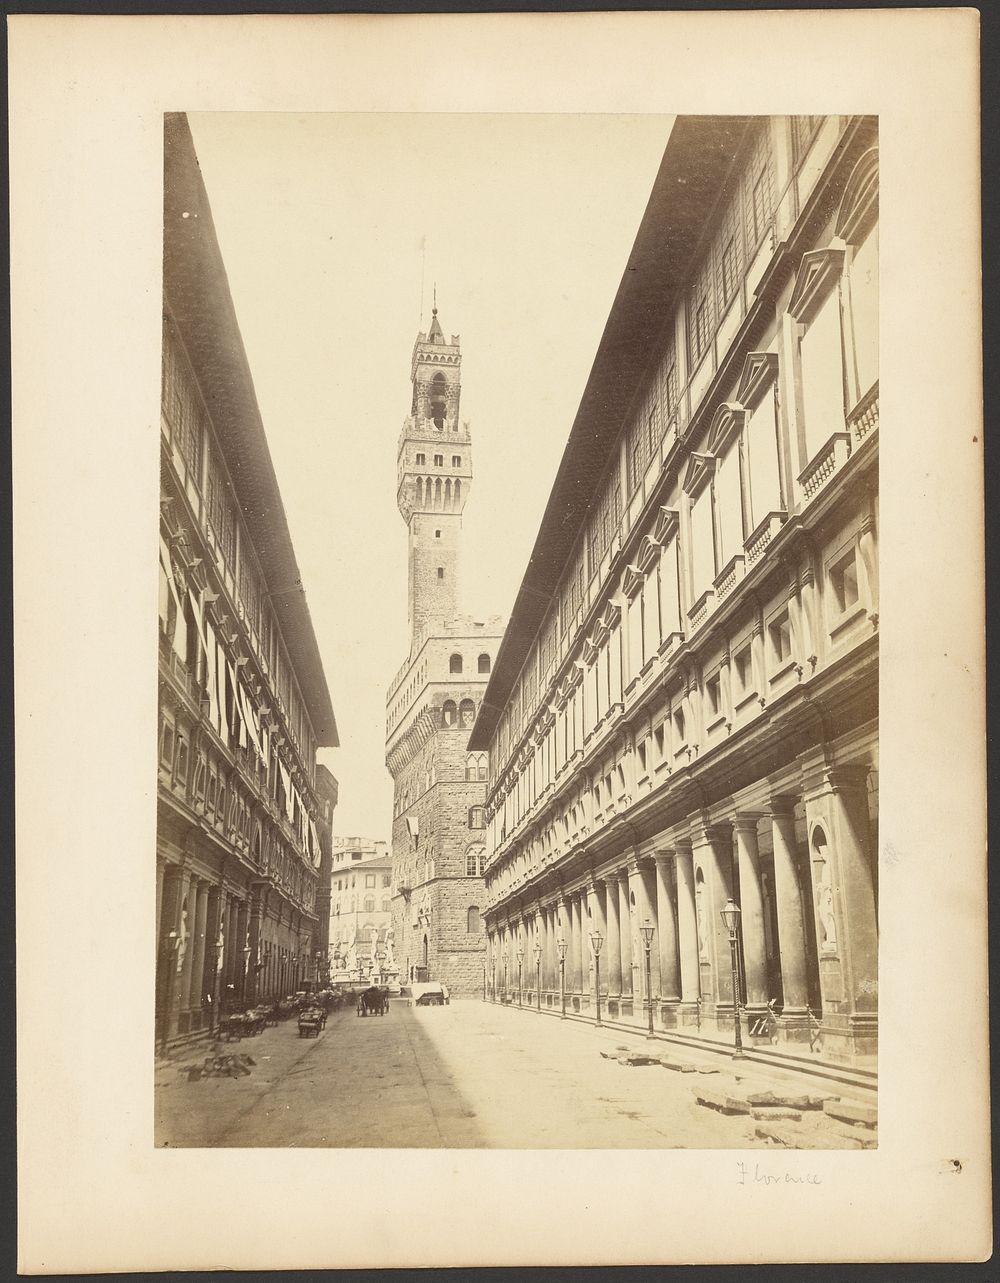 Uffizi Gallery and Palazzo Vecchio